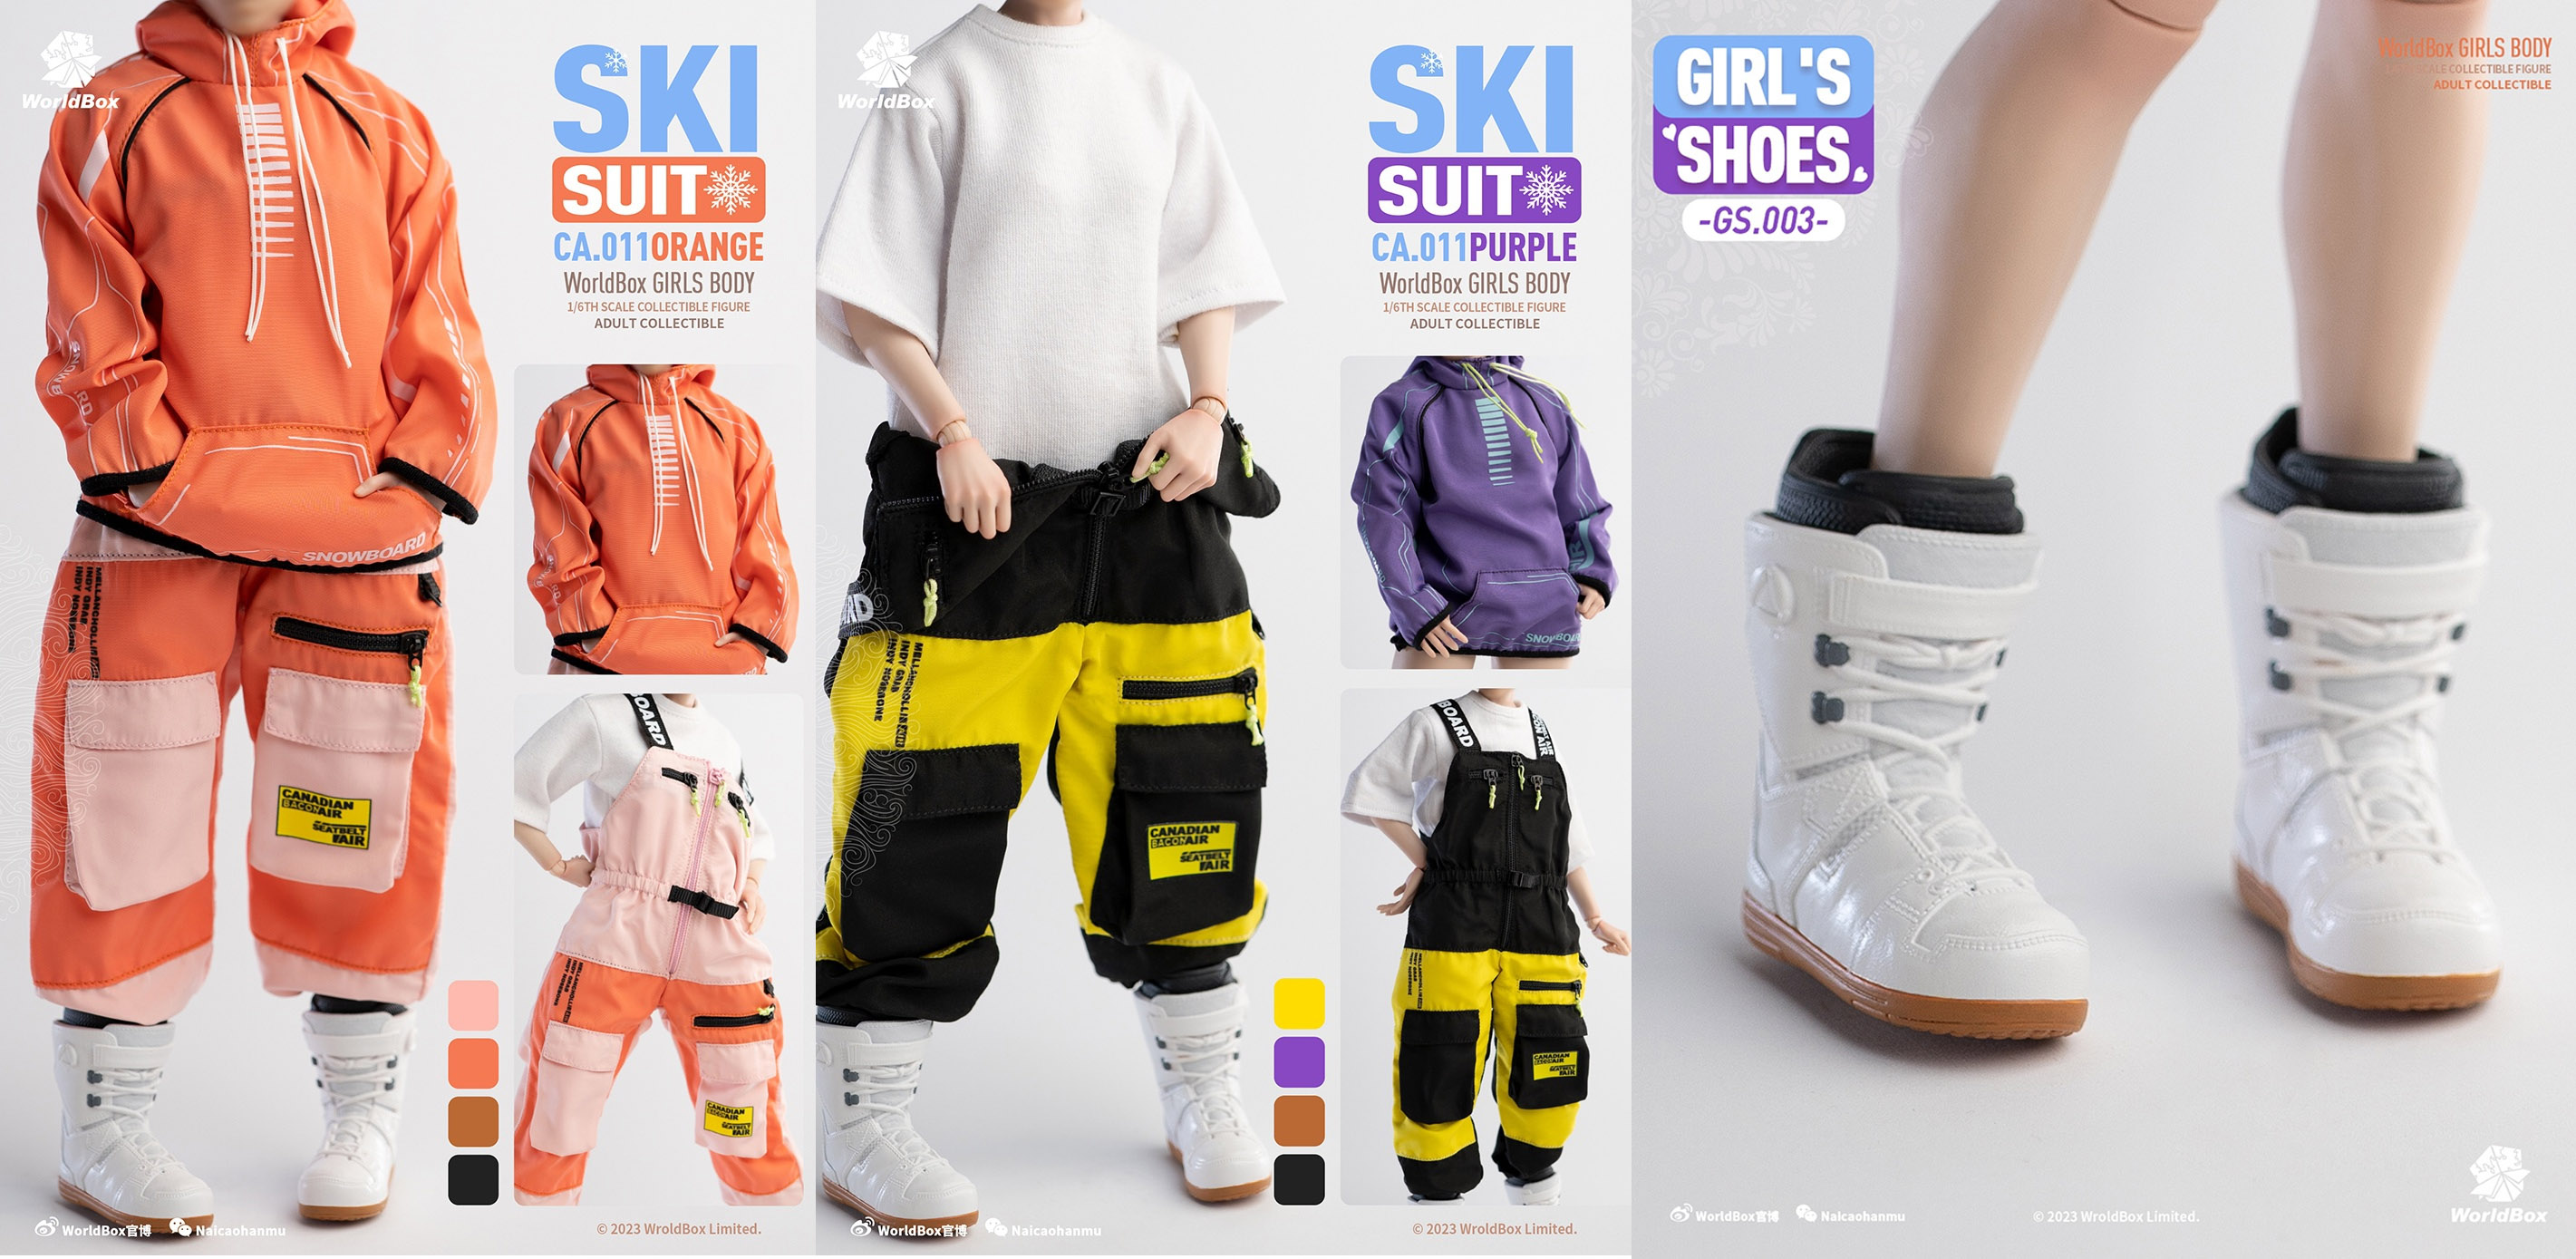 Snow - NEW PRODUCT: Worldbox Winter Snow Wear Orange Purple Suit CA011 & Ski Shoes GS003 0028